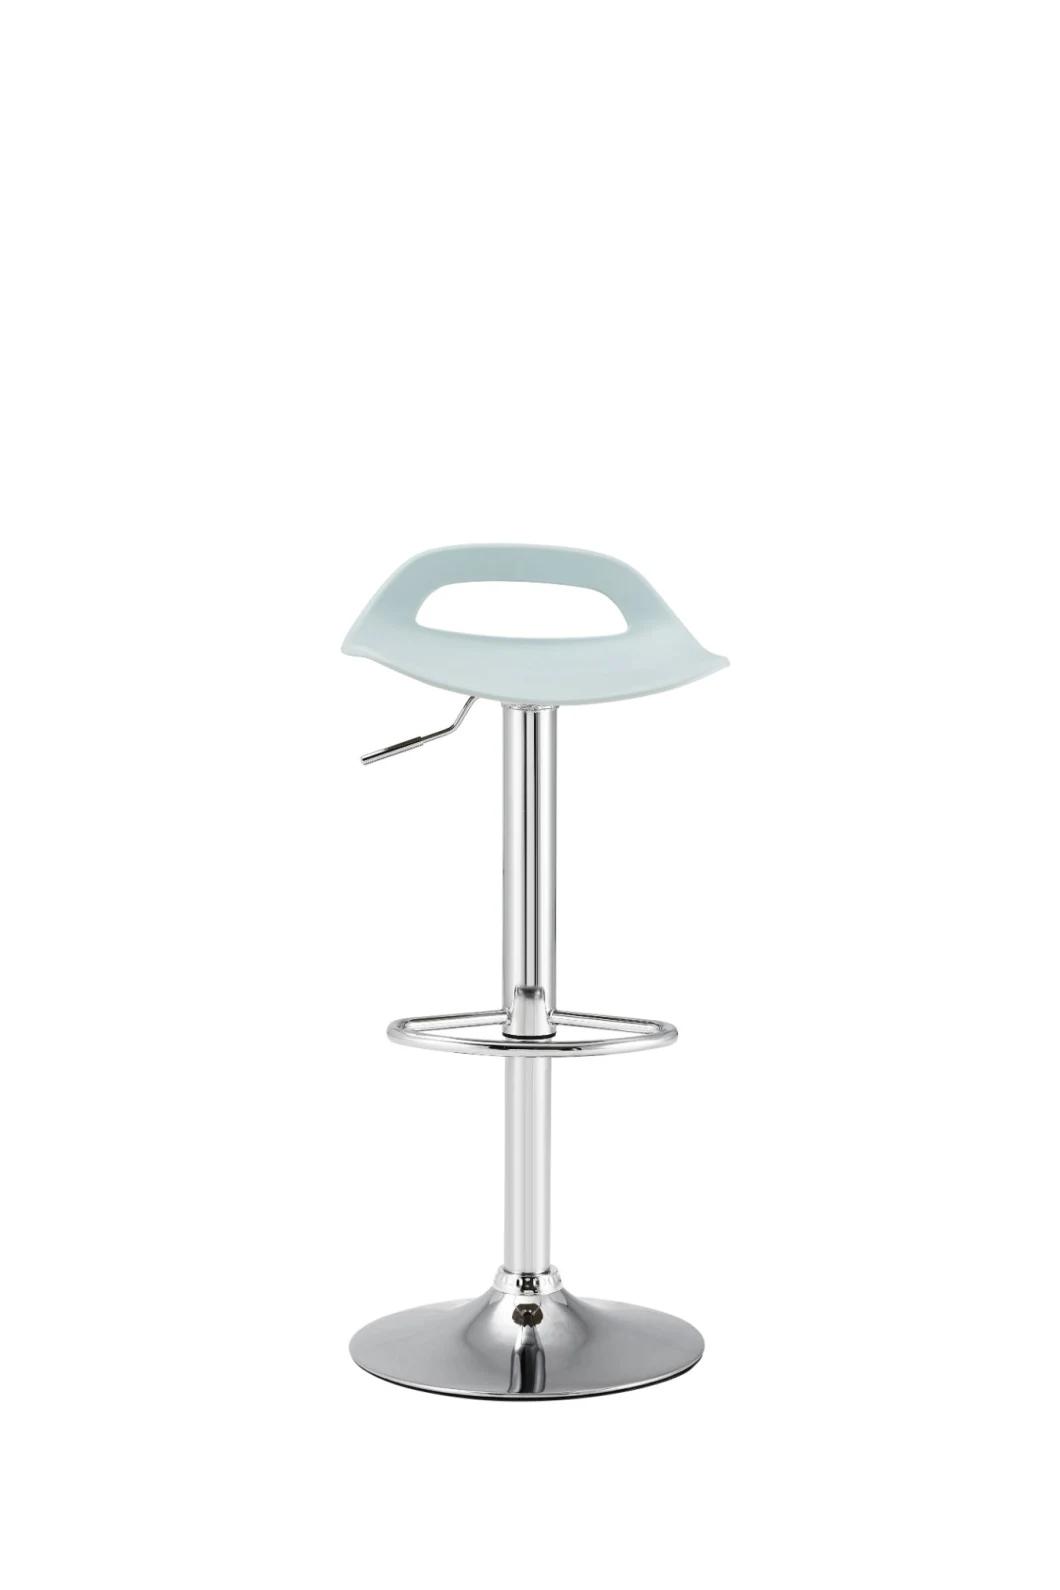 Adjustable Swivel ABS Seat Metal Stool Simple Plastic Bar Stool High Chair Bar Modern Kitchen Counter Top Bar Chair